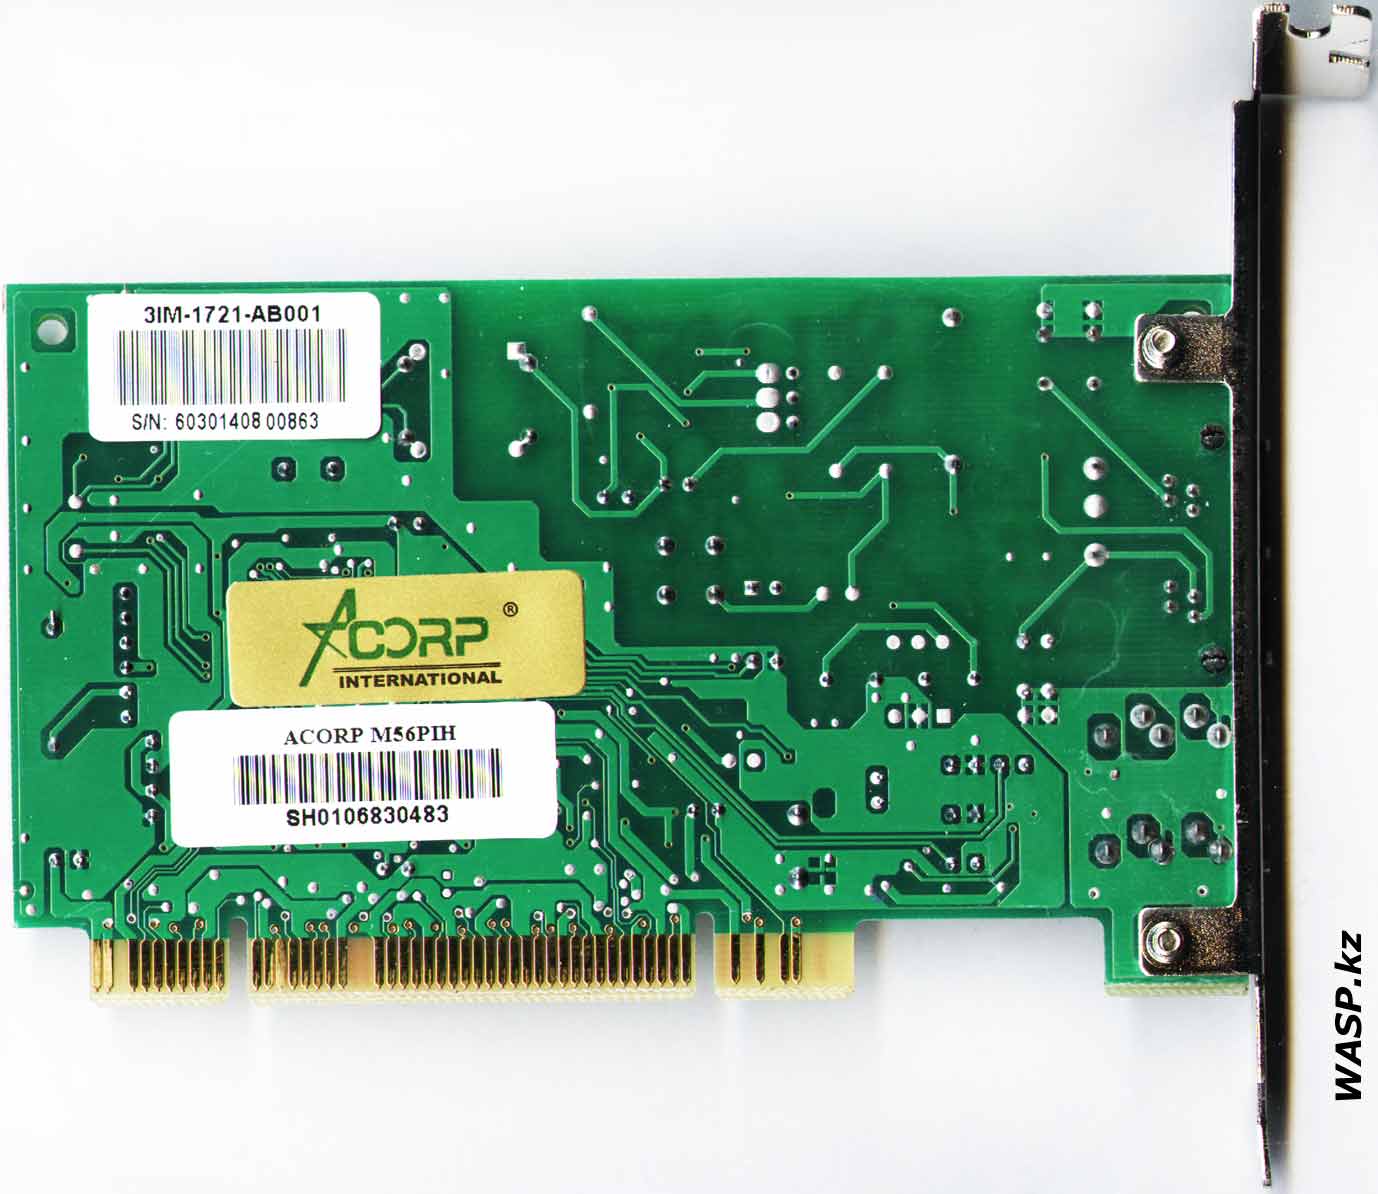 Acorp M56PIH CXT1085 HCF PCI Modem описание